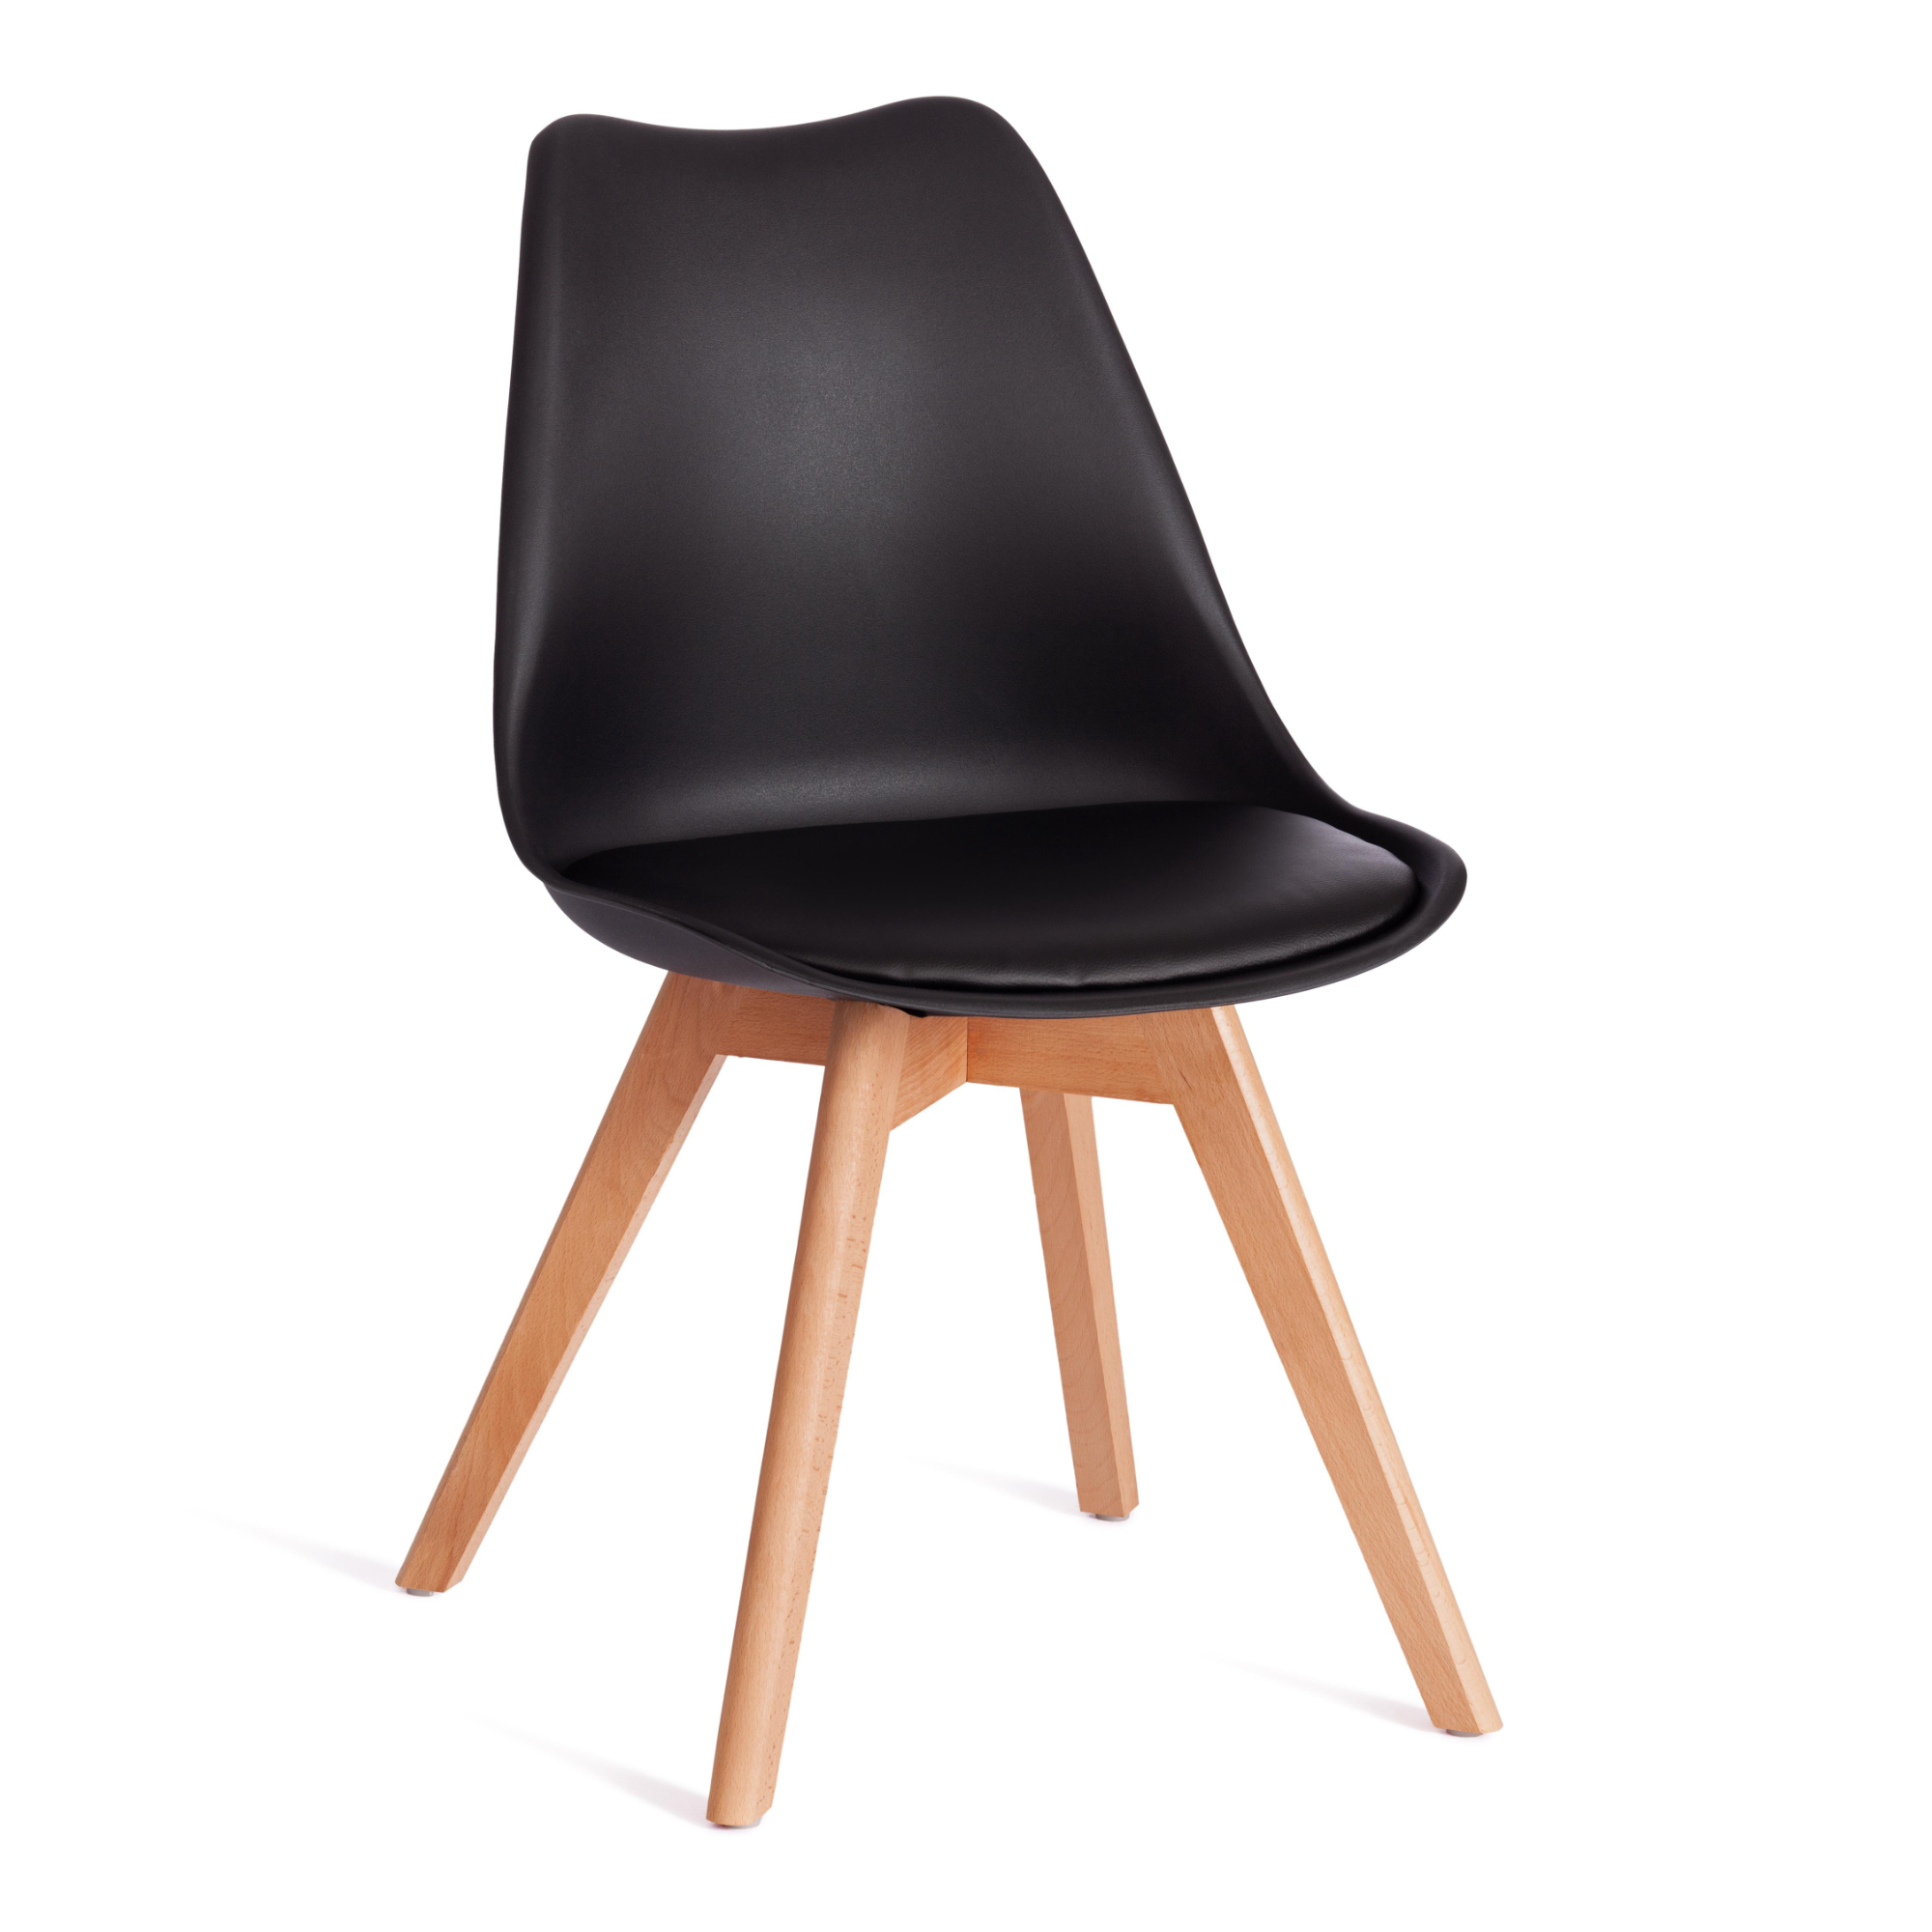 стул для кухни harbour пластик серый ножки дерево Стул ТС черный из дерева, пластика, экокожи 47,5x55x80 см